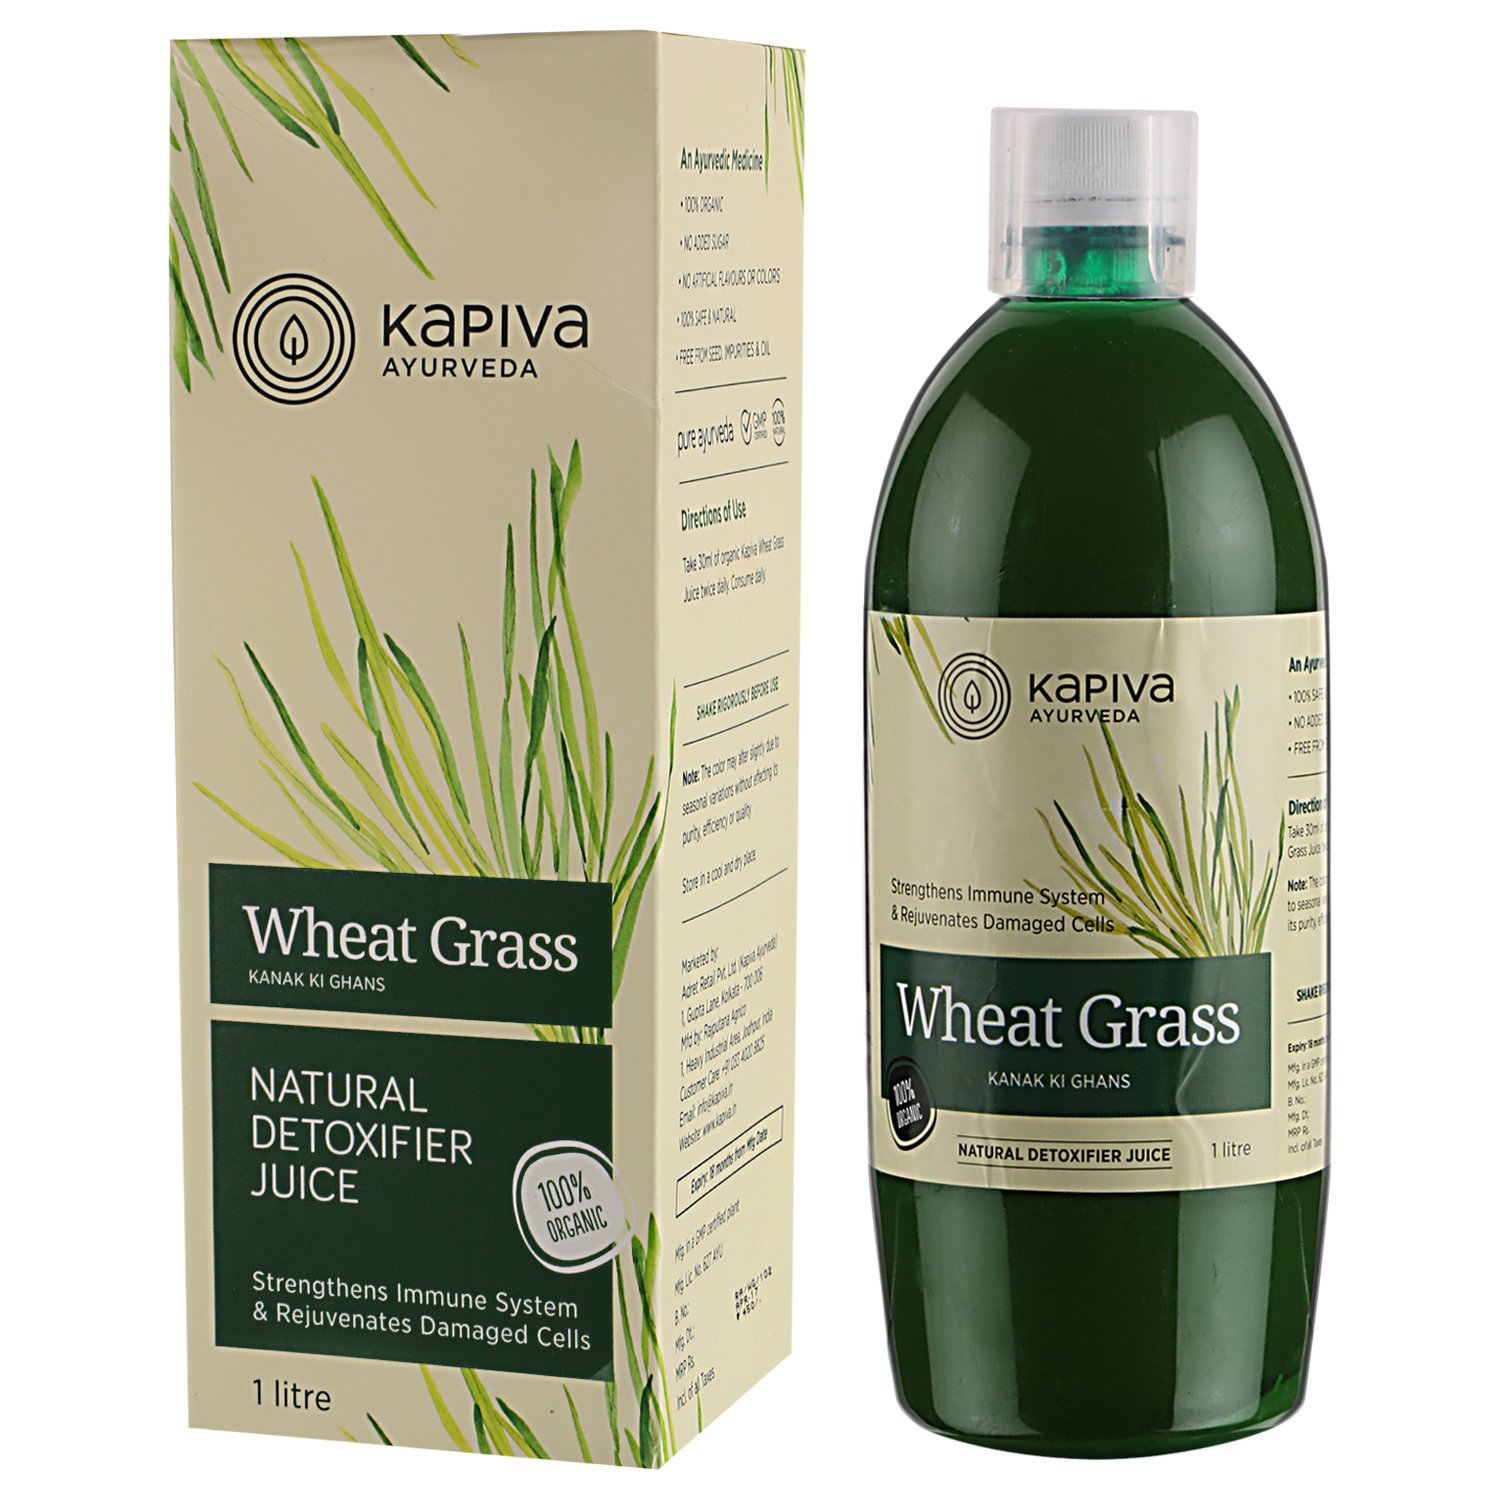 Buy Kapiva Wheat Grass Juice at Best Price Online